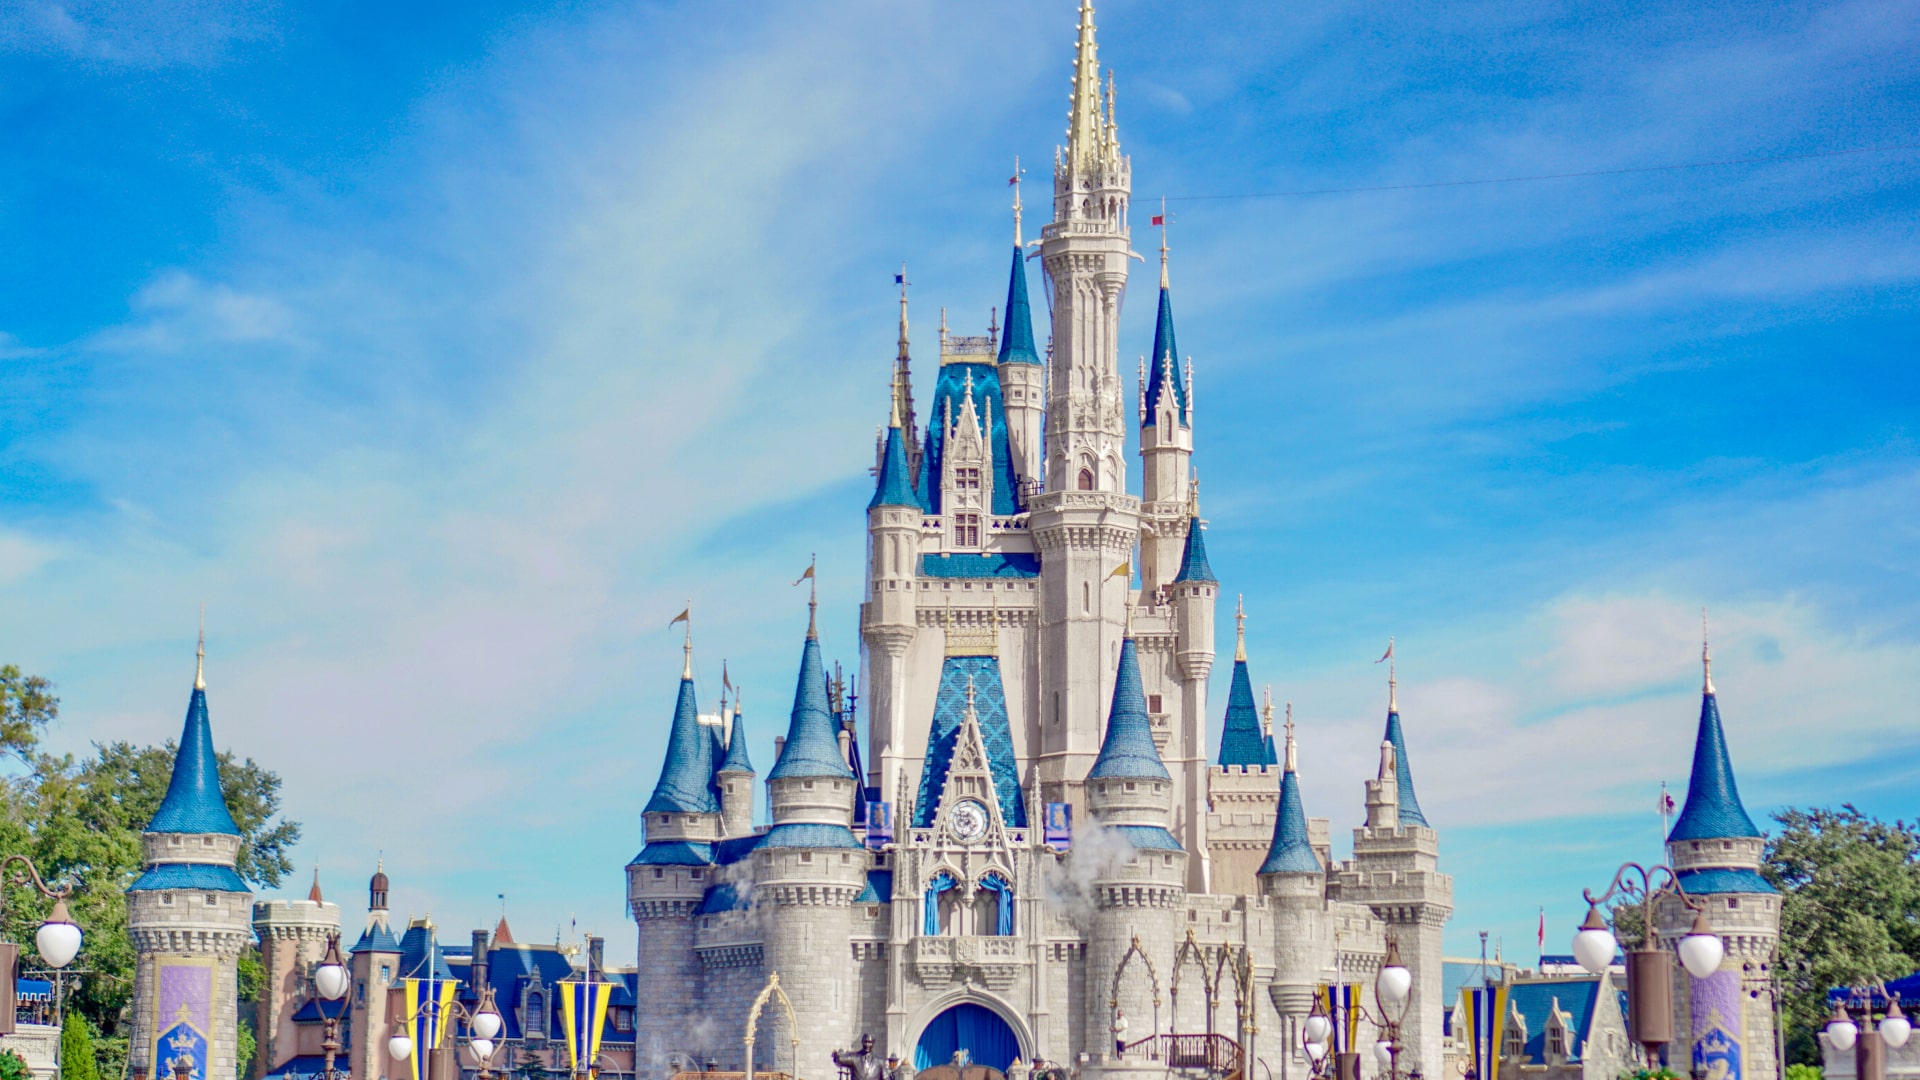 DisneyCastle in Disney World.